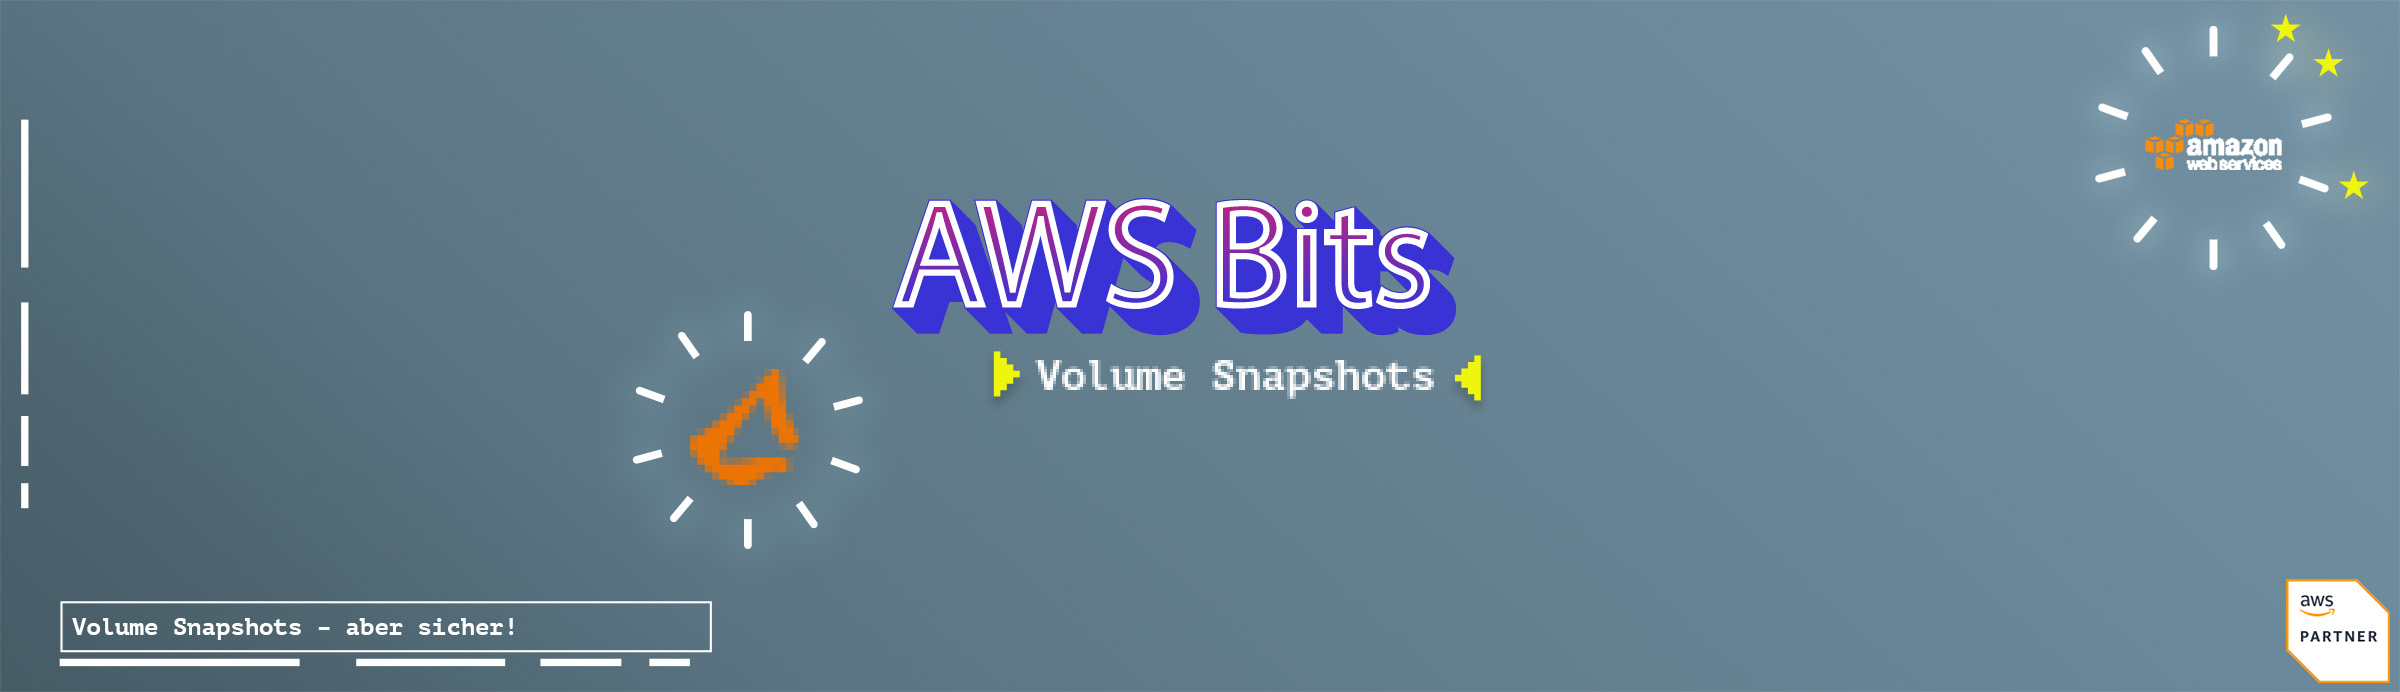 AWS Bits: Volume Snapshots